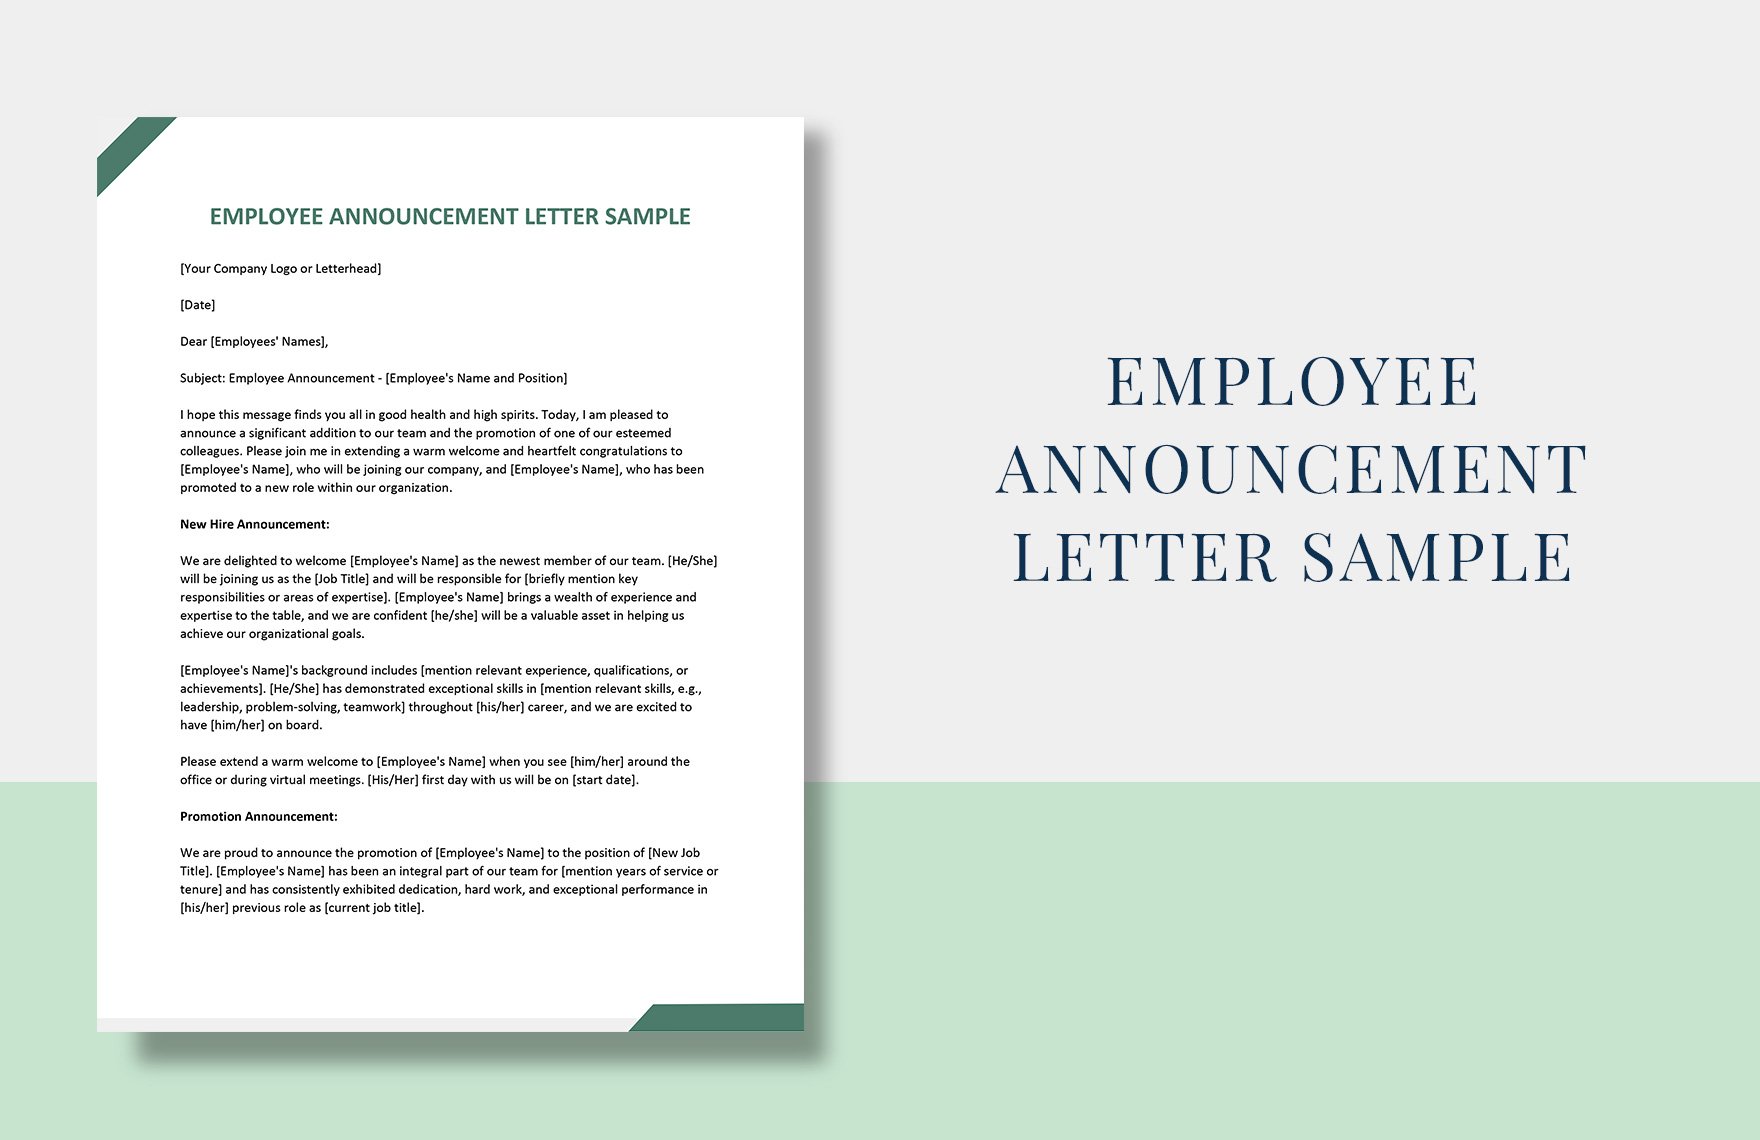 Employee Announcement Letter Sample